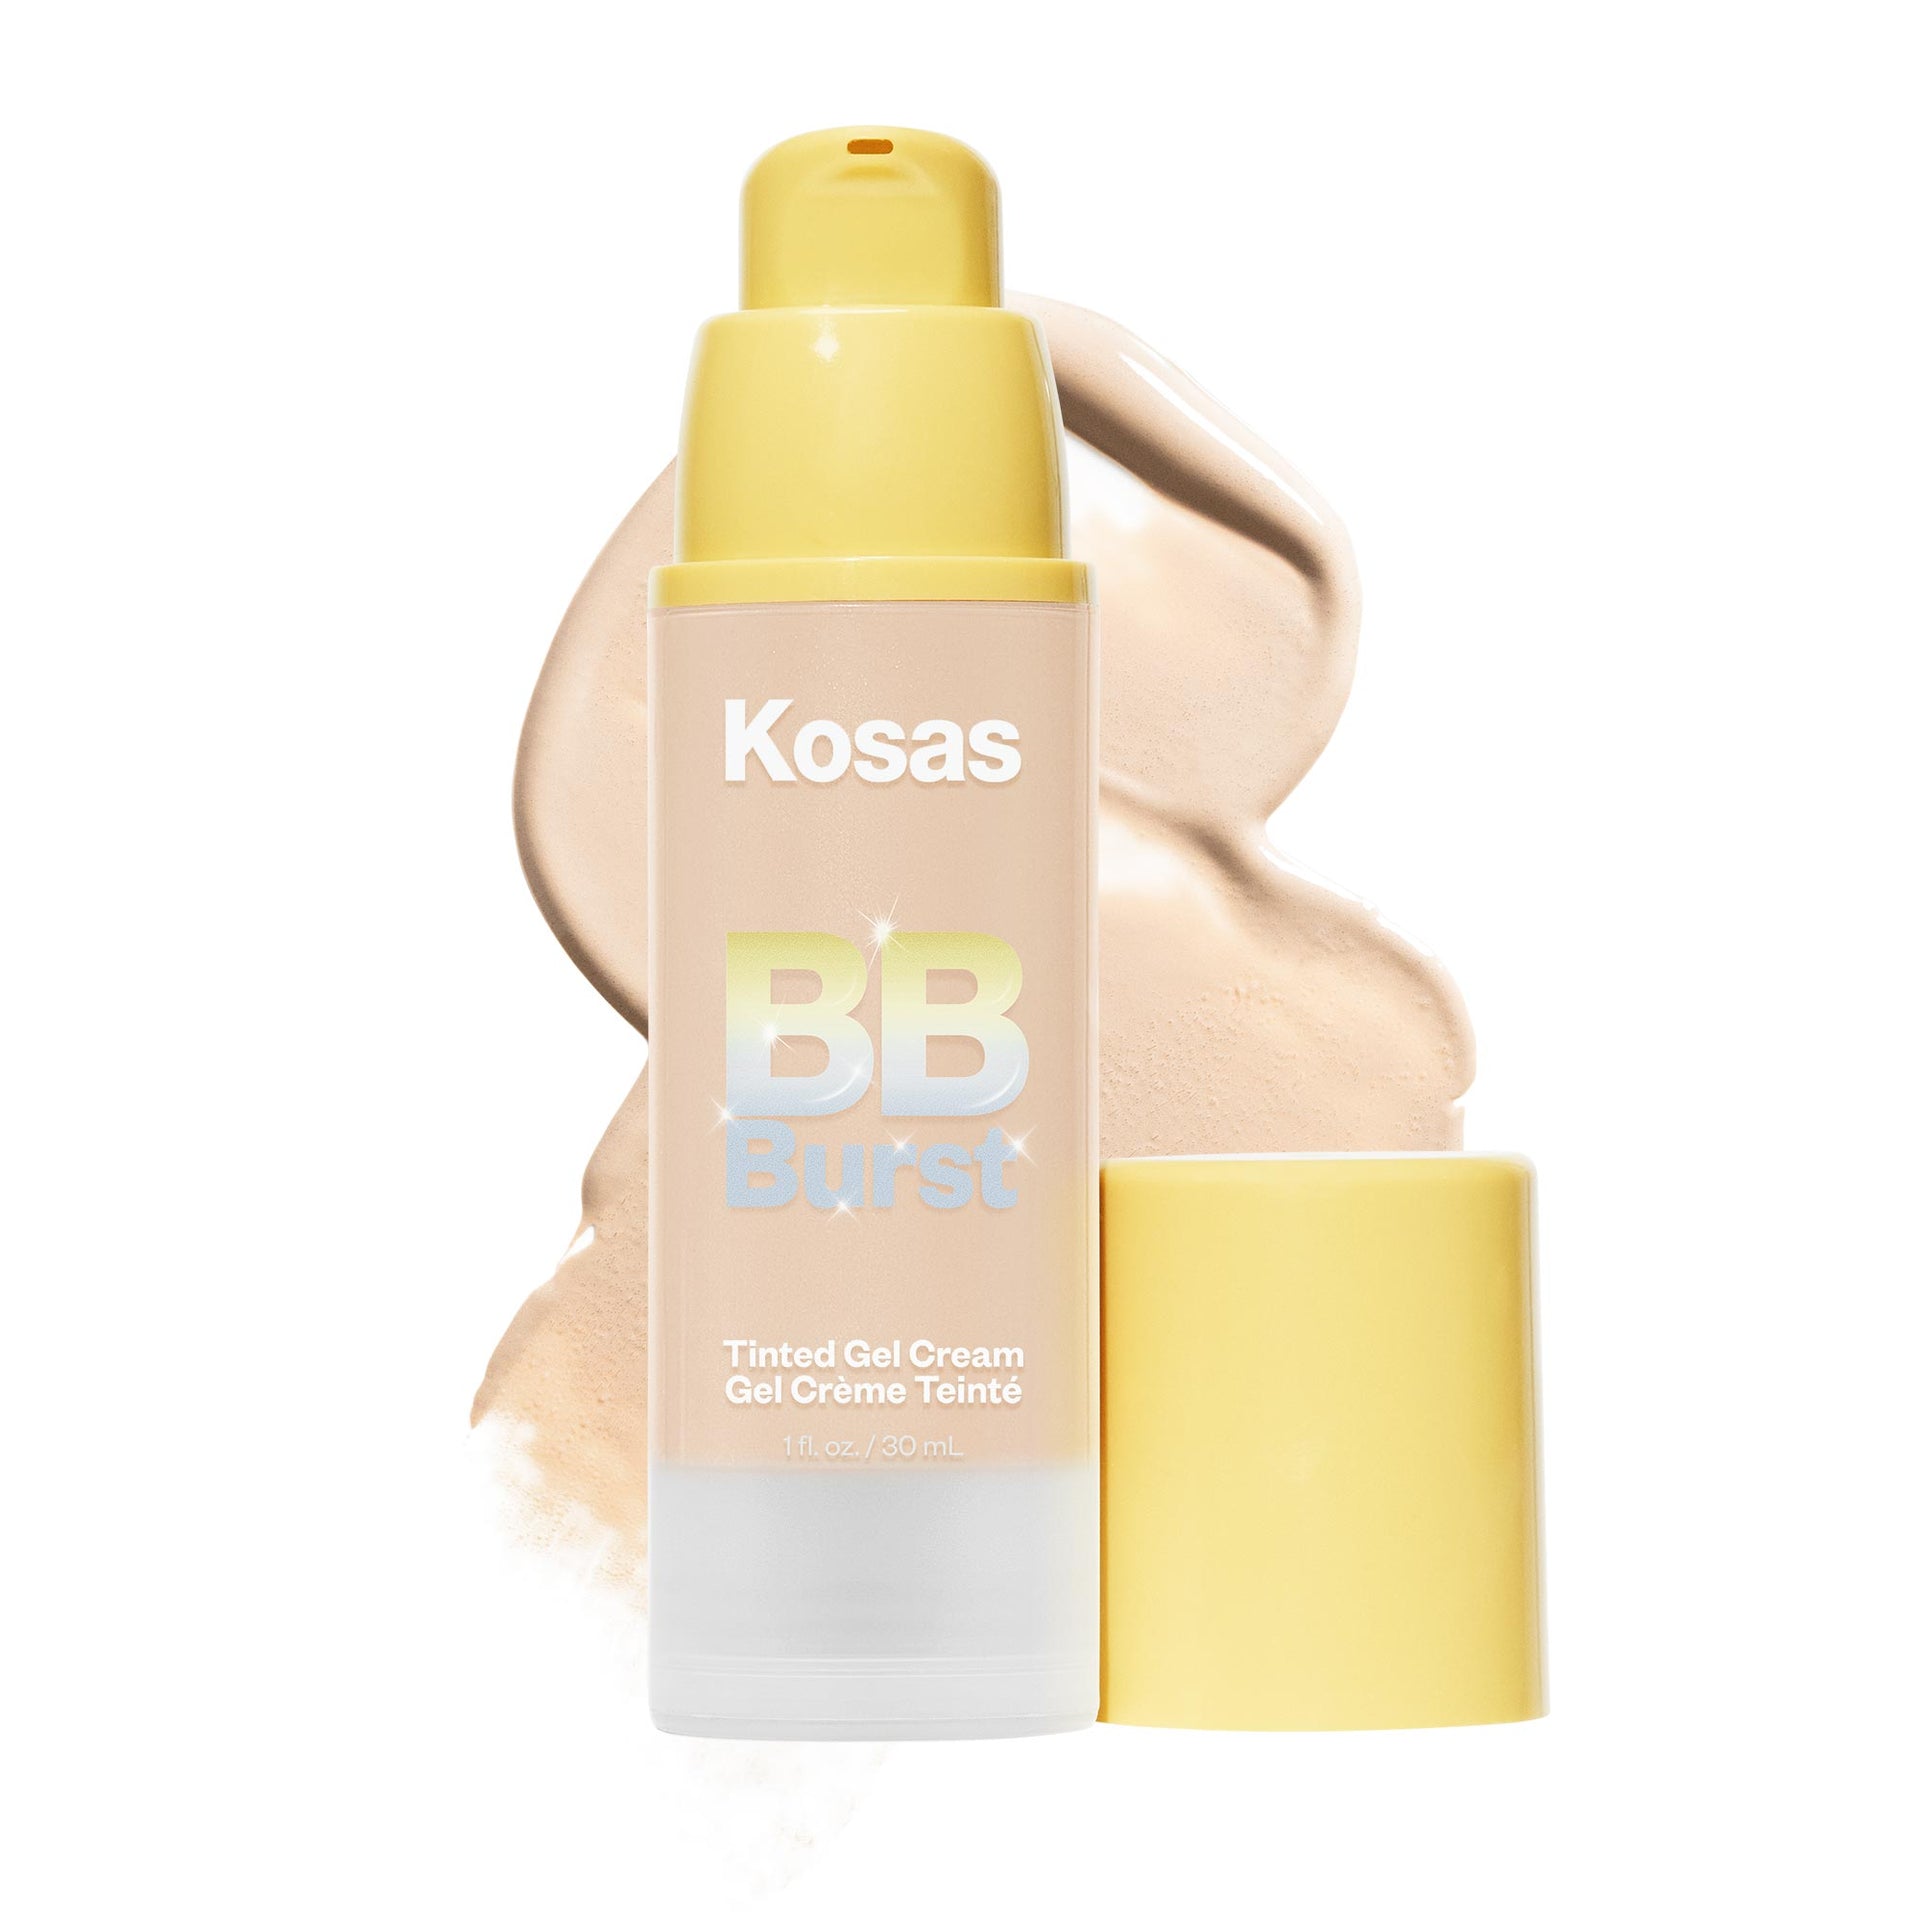 Kosas BB Burst in the shade Light Neutral 12